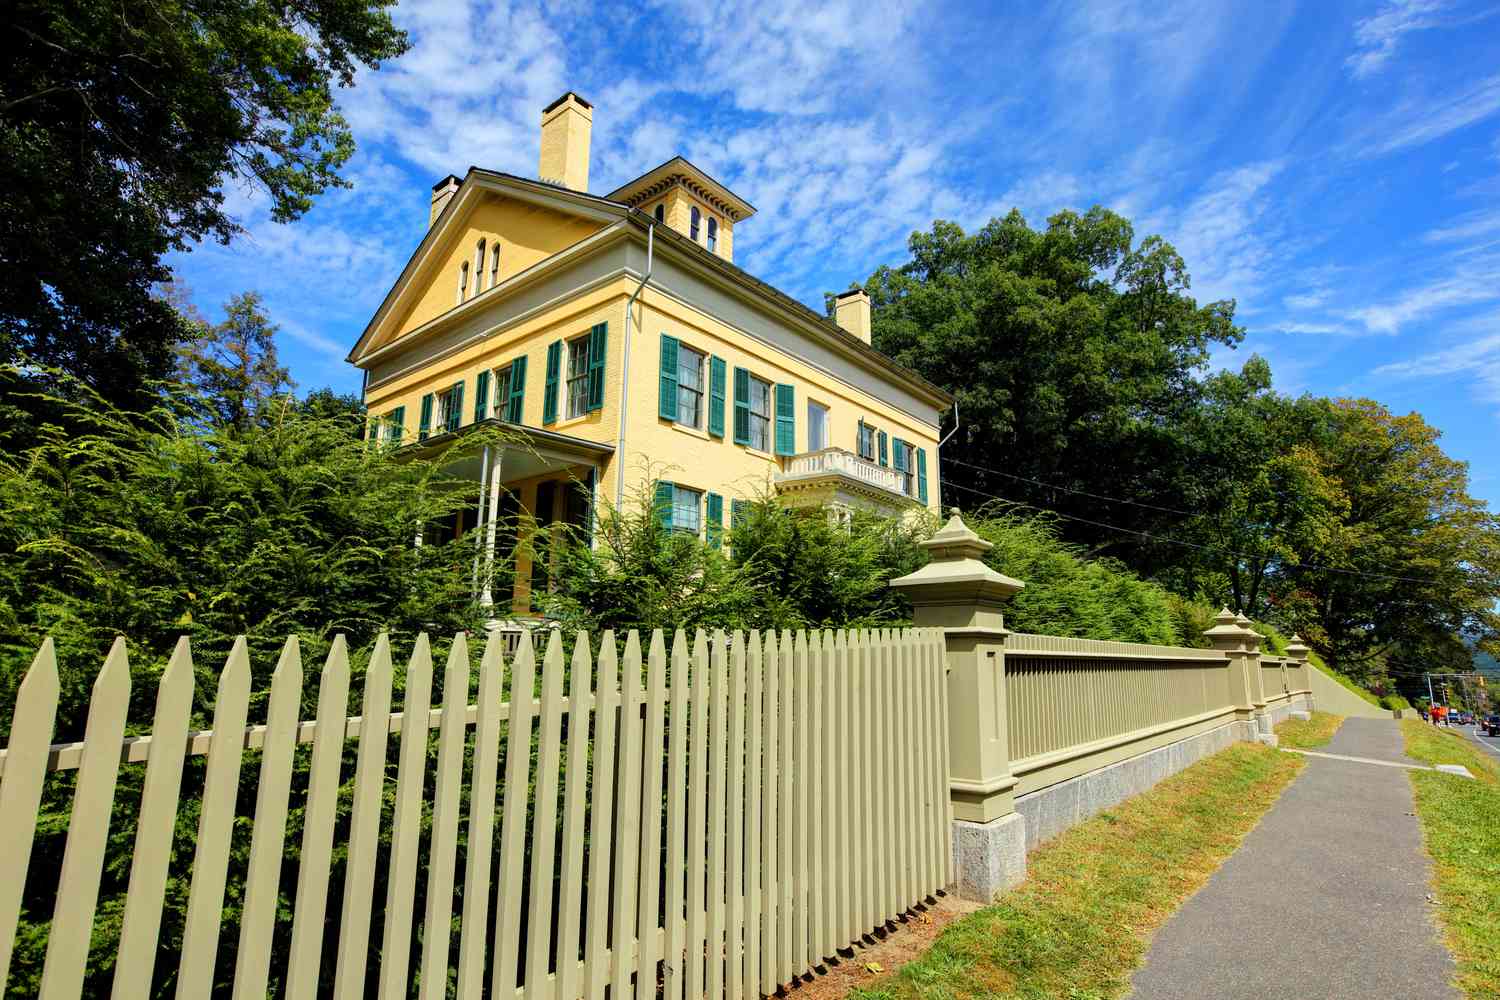 Emily Dickinson's home